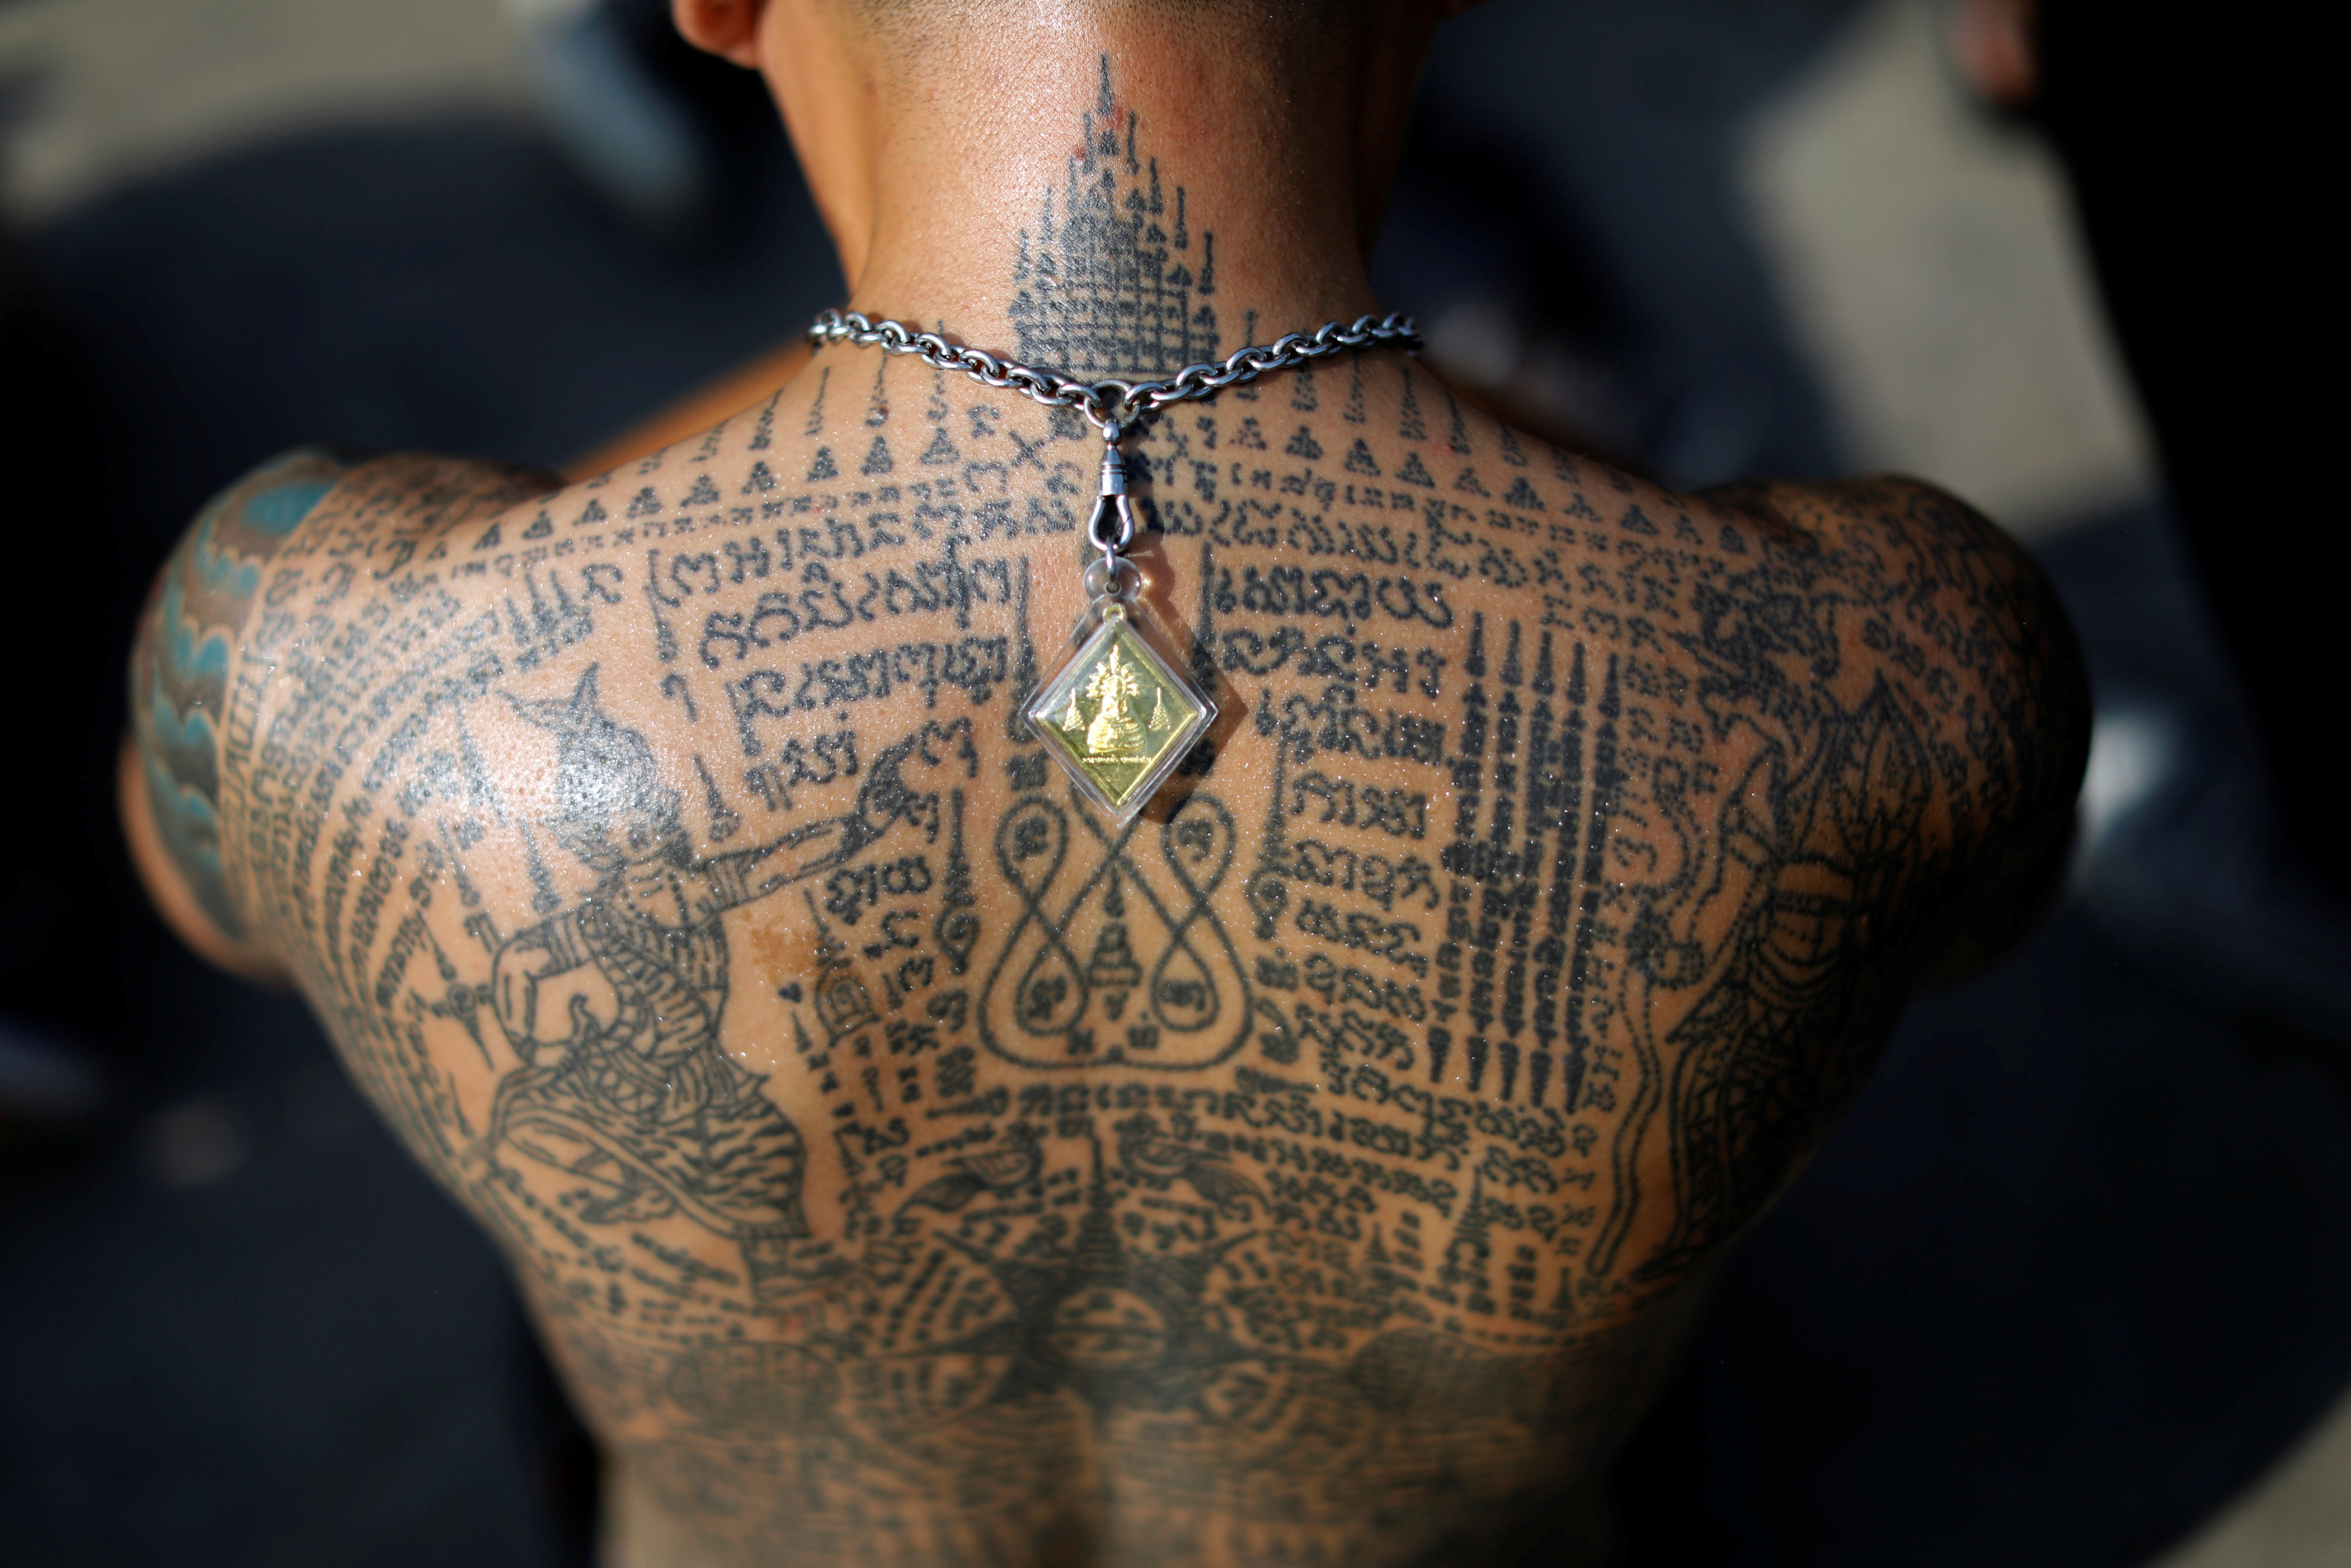 Tattooed devotees transform in Thai temple trance